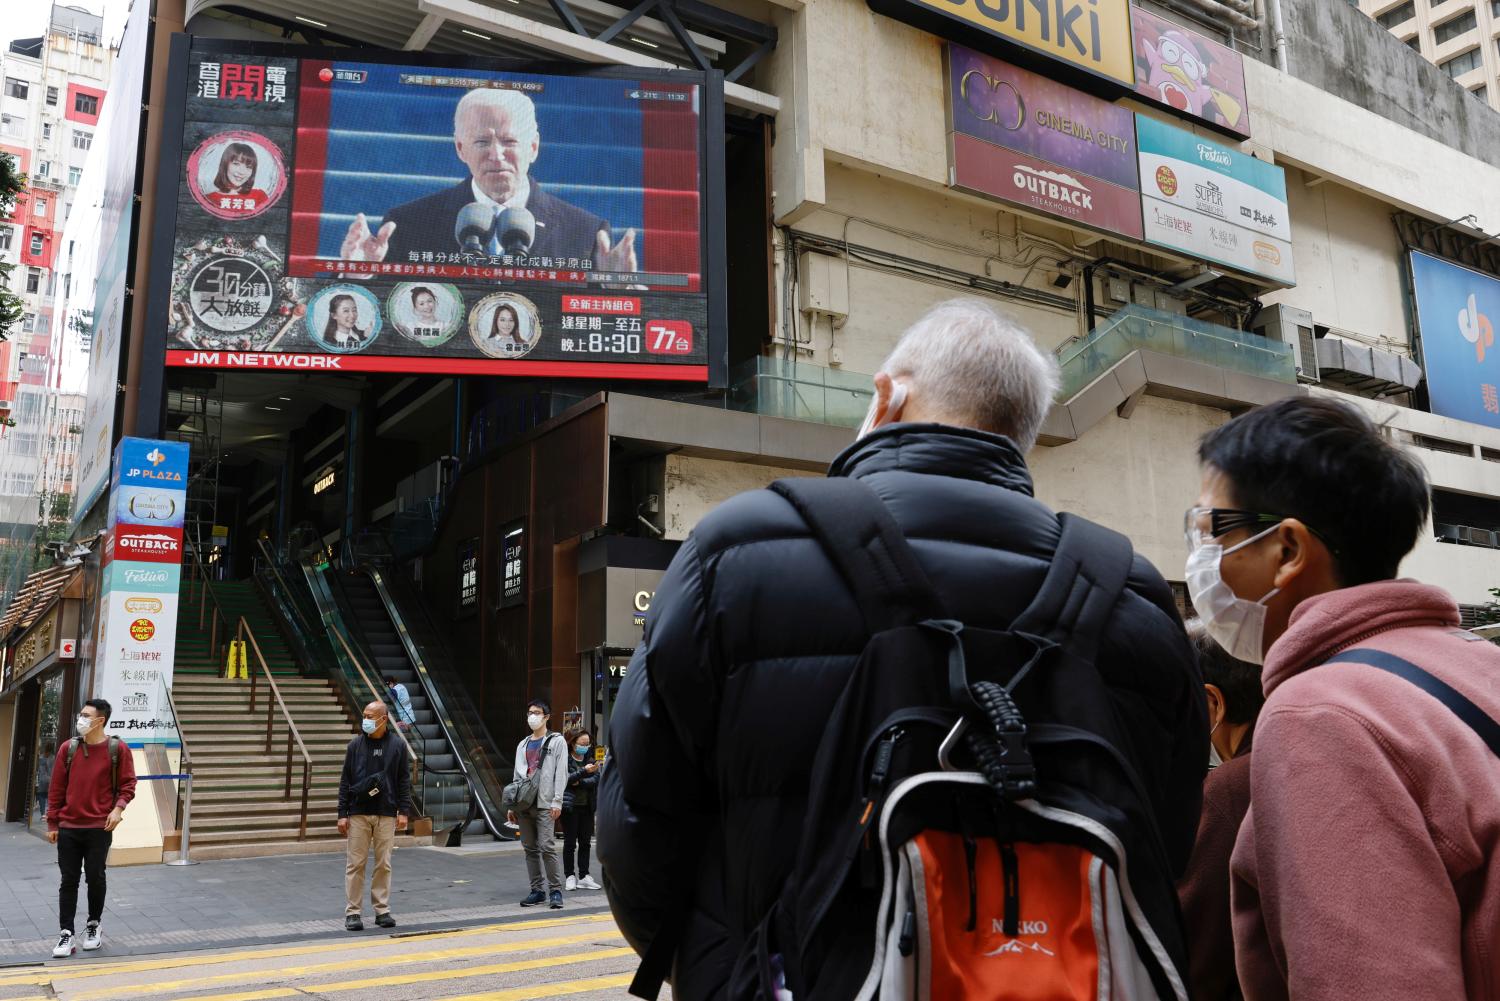 People look at a TV screen showing news of U.S. President Joe Biden after his inauguration, in Hong Kong, China January 21, 2021. REUTERS/Tyrone Siu